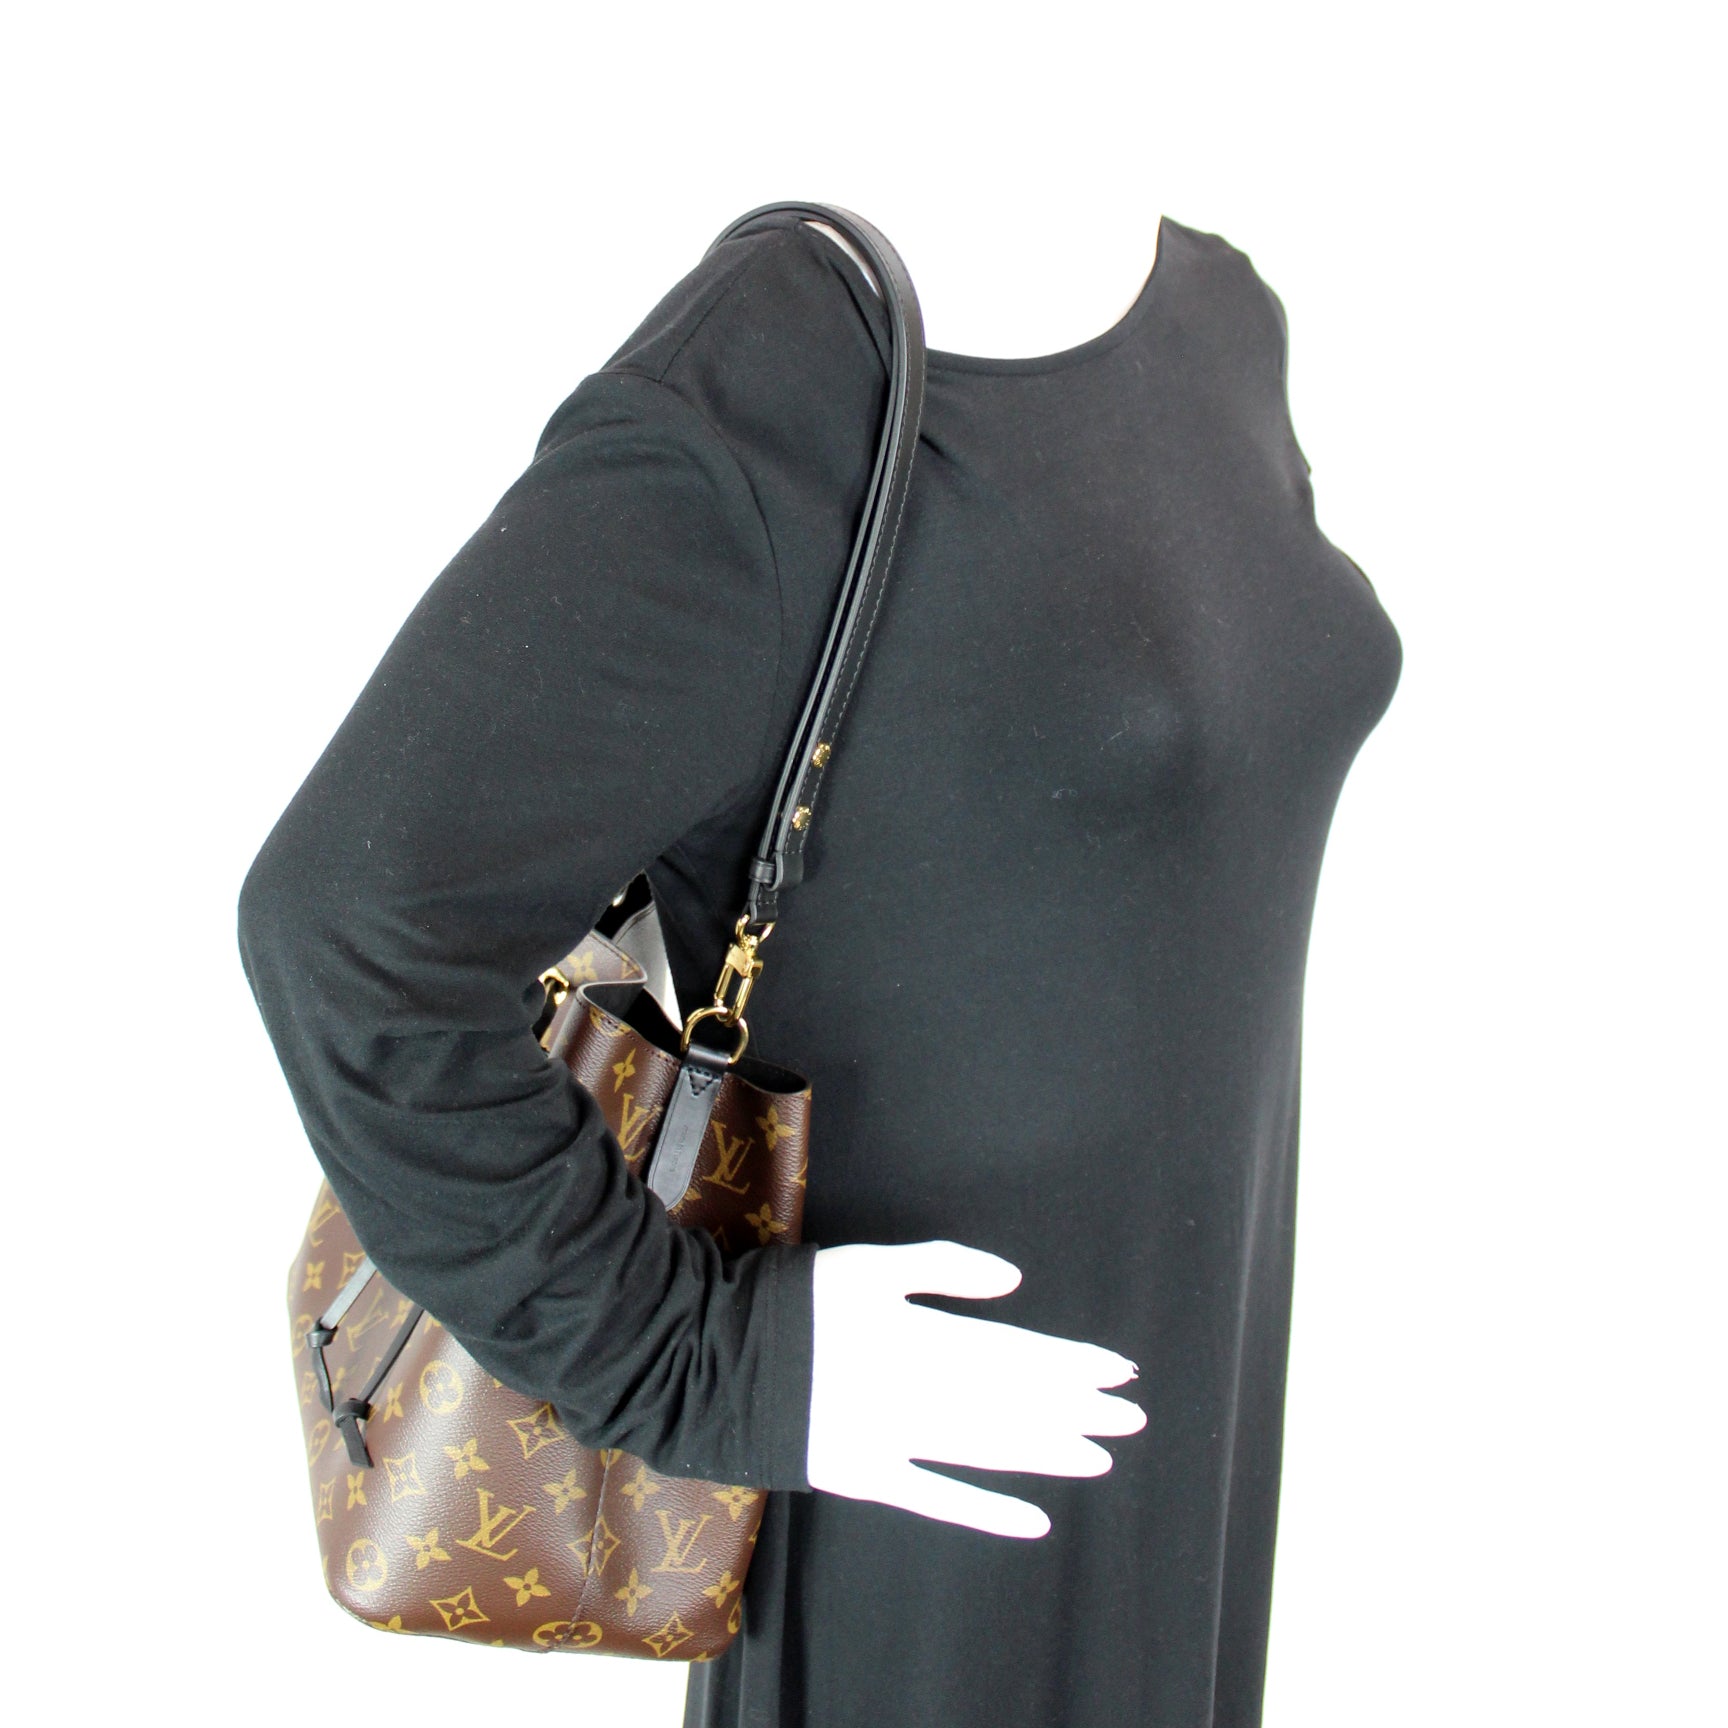 Neonoe Summer Trunks – Keeks Designer Handbags